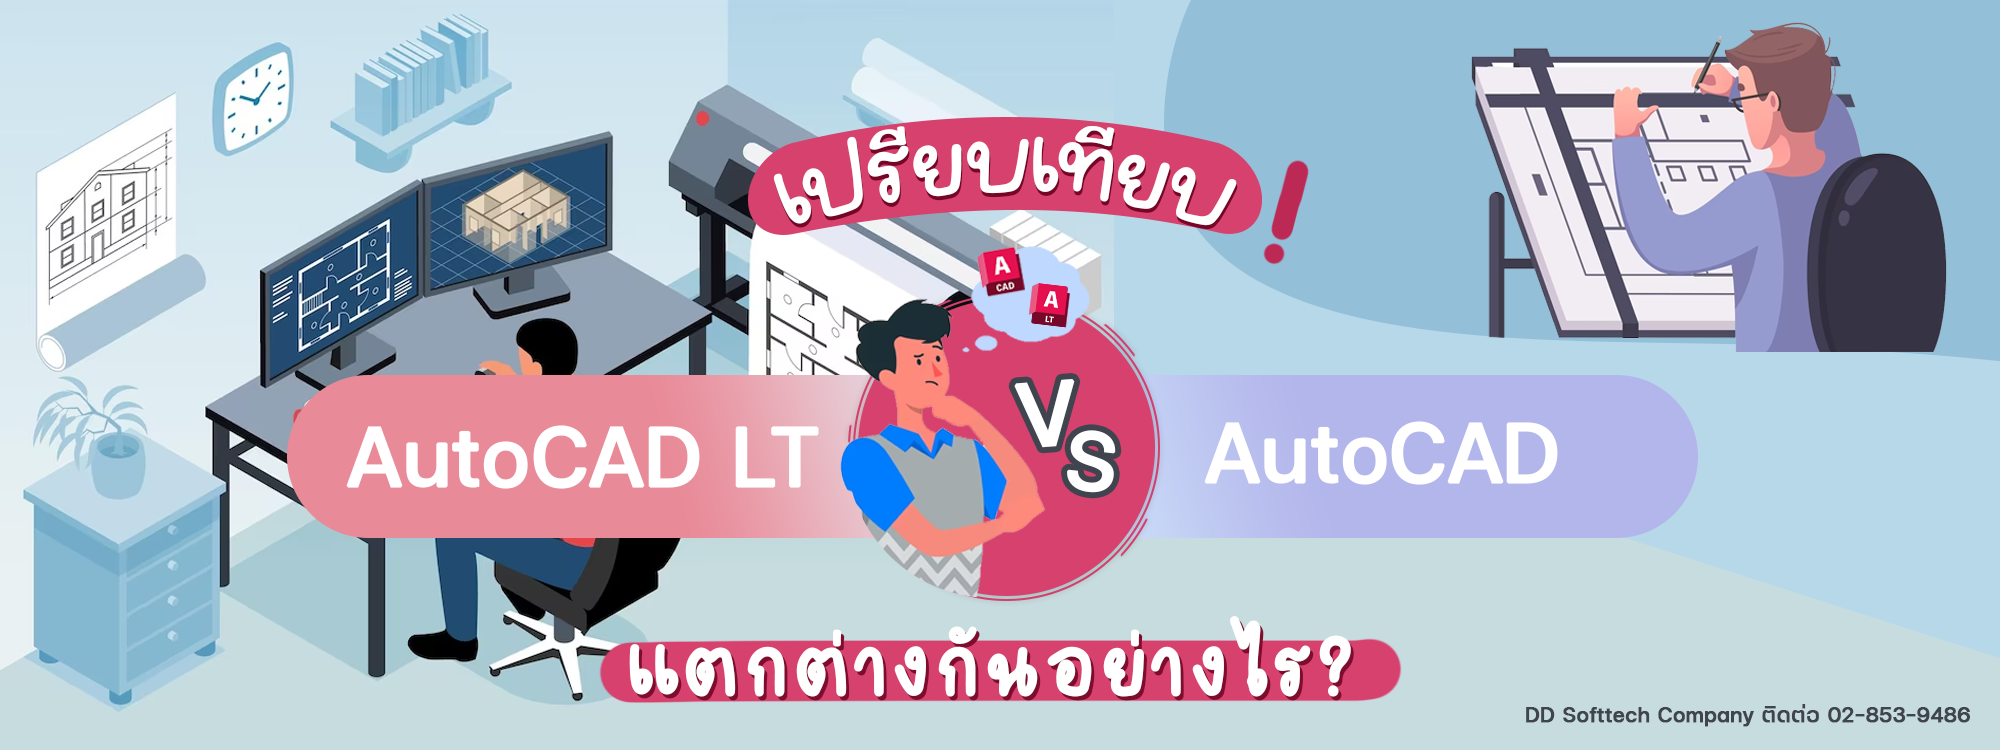 AutoCAD และ AutoCAD LT แตกต่างกันอย่างไร